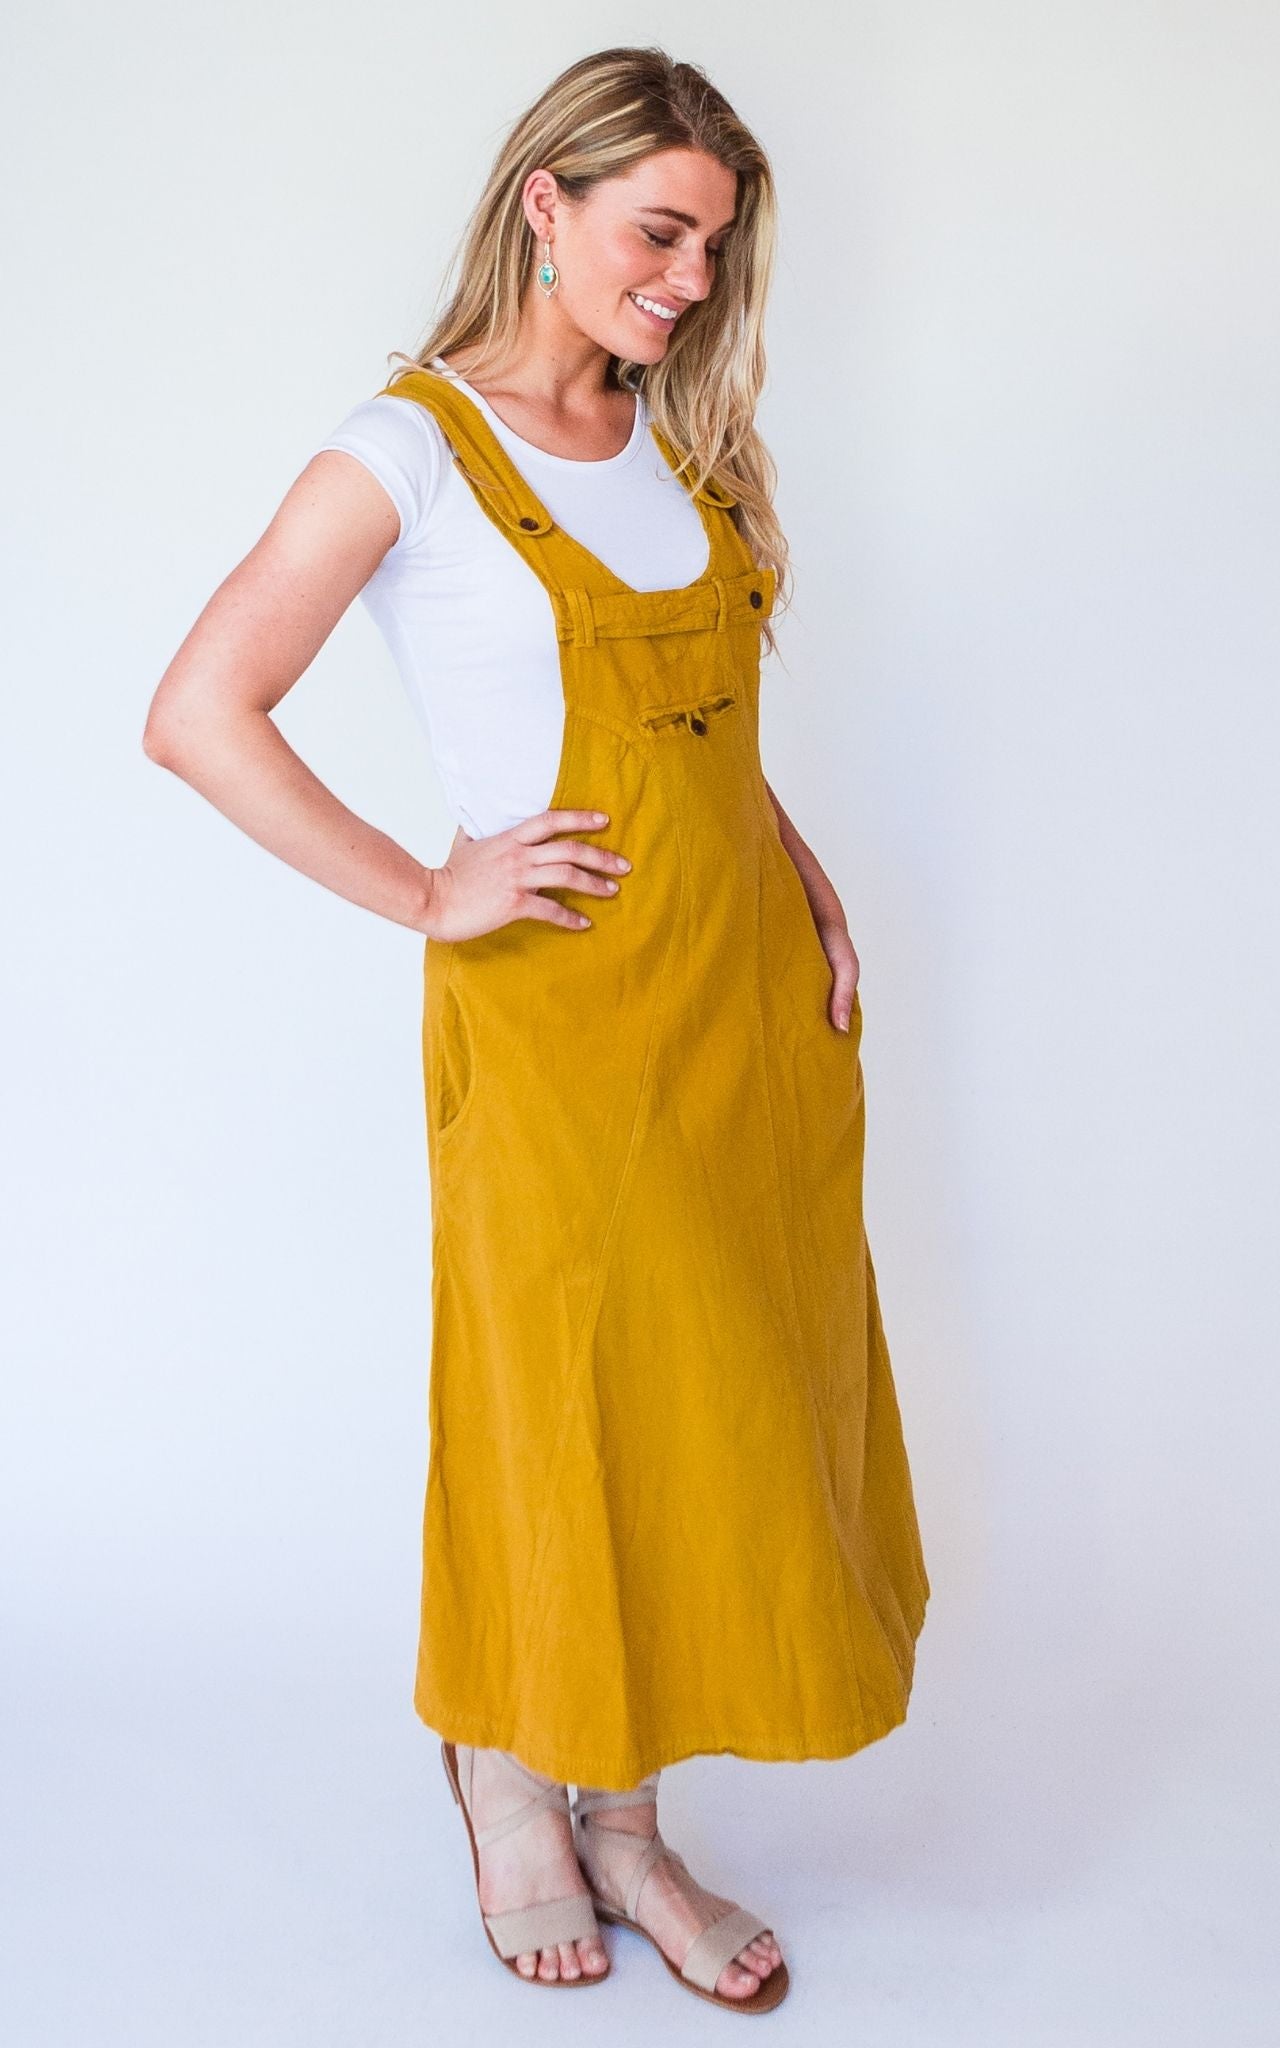 Surya Australia Ethical Cotton Dungaree Dress made in Nepal - Mustard